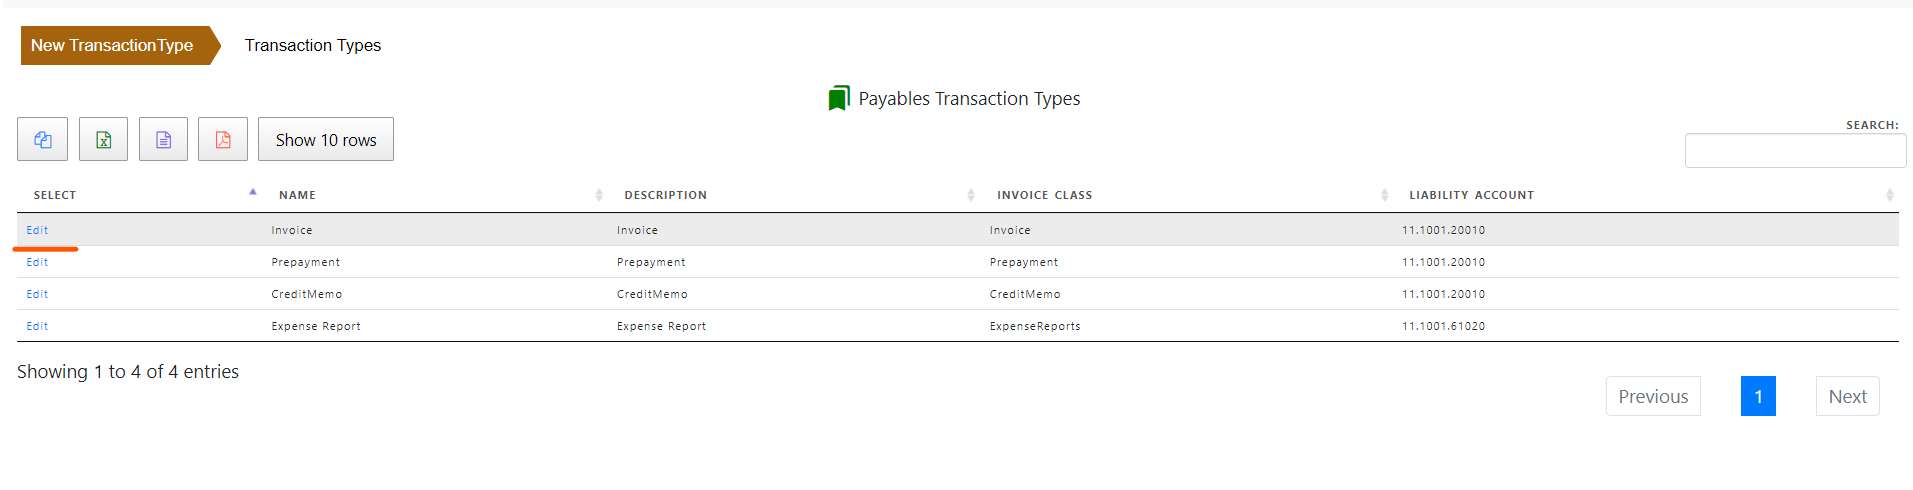 Payables Transaction Types